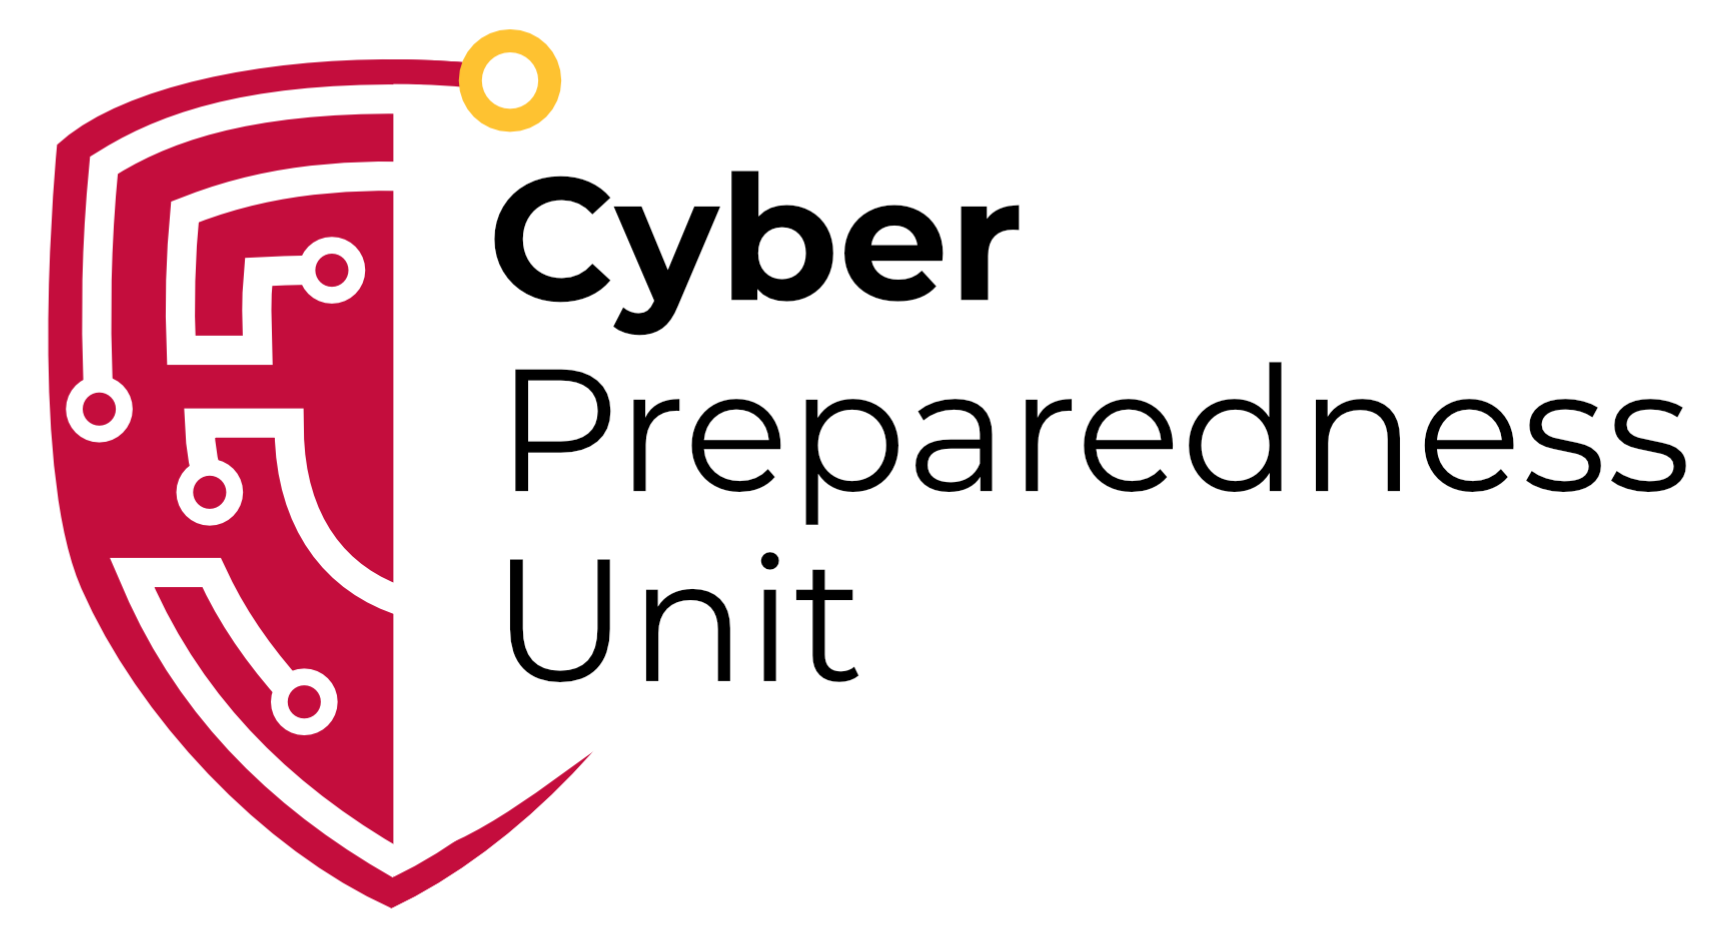 The Cyberpreparedness Unit logo